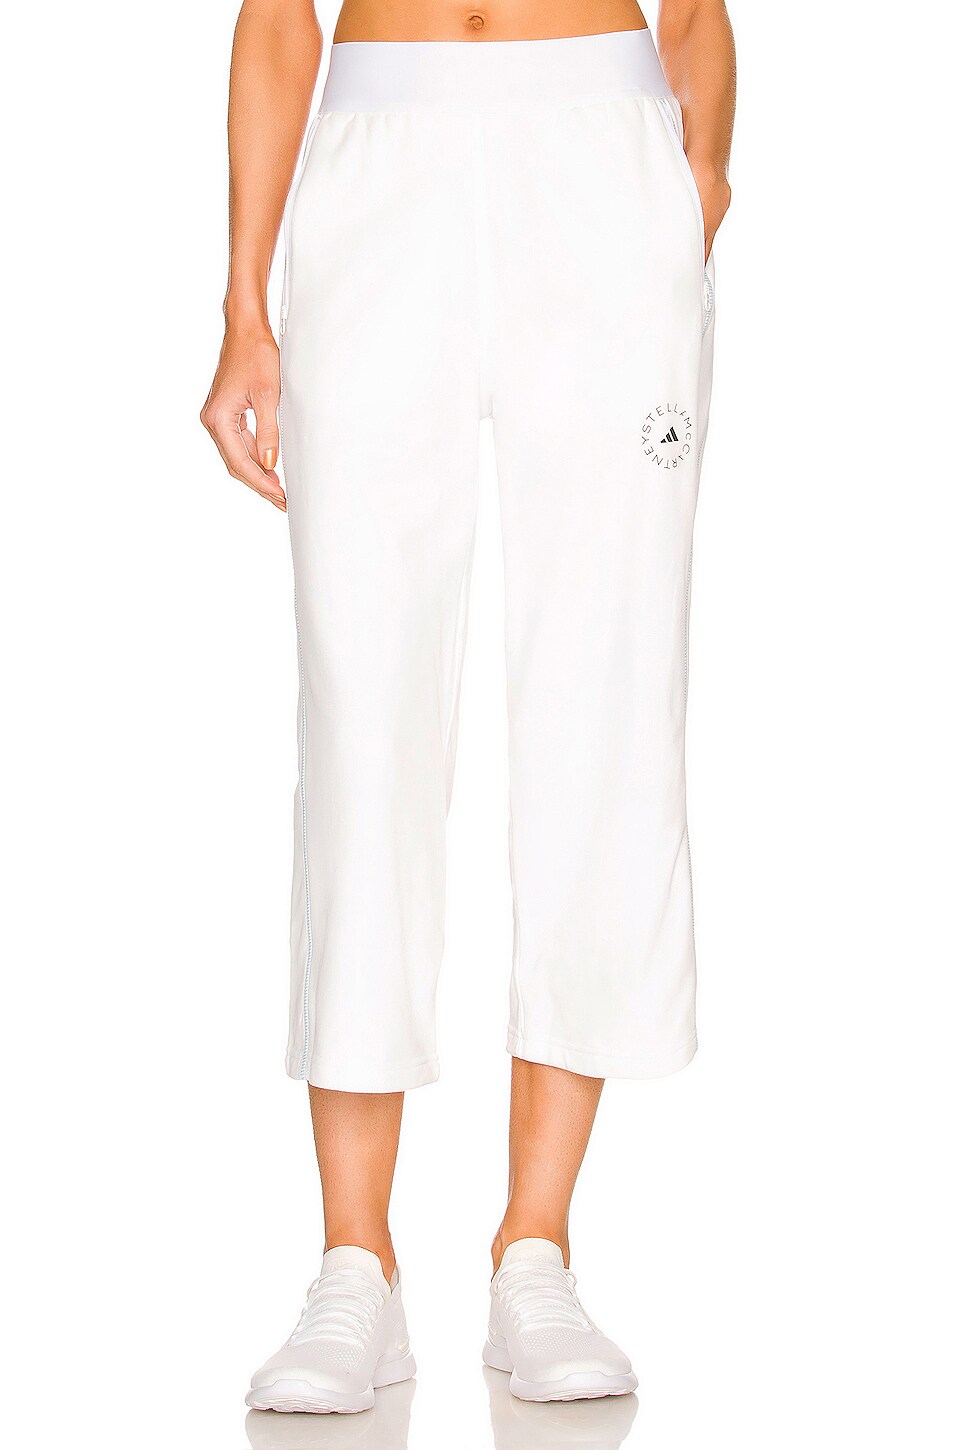 adidas by Stella McCartney Sweatpants in White | REVOLVE